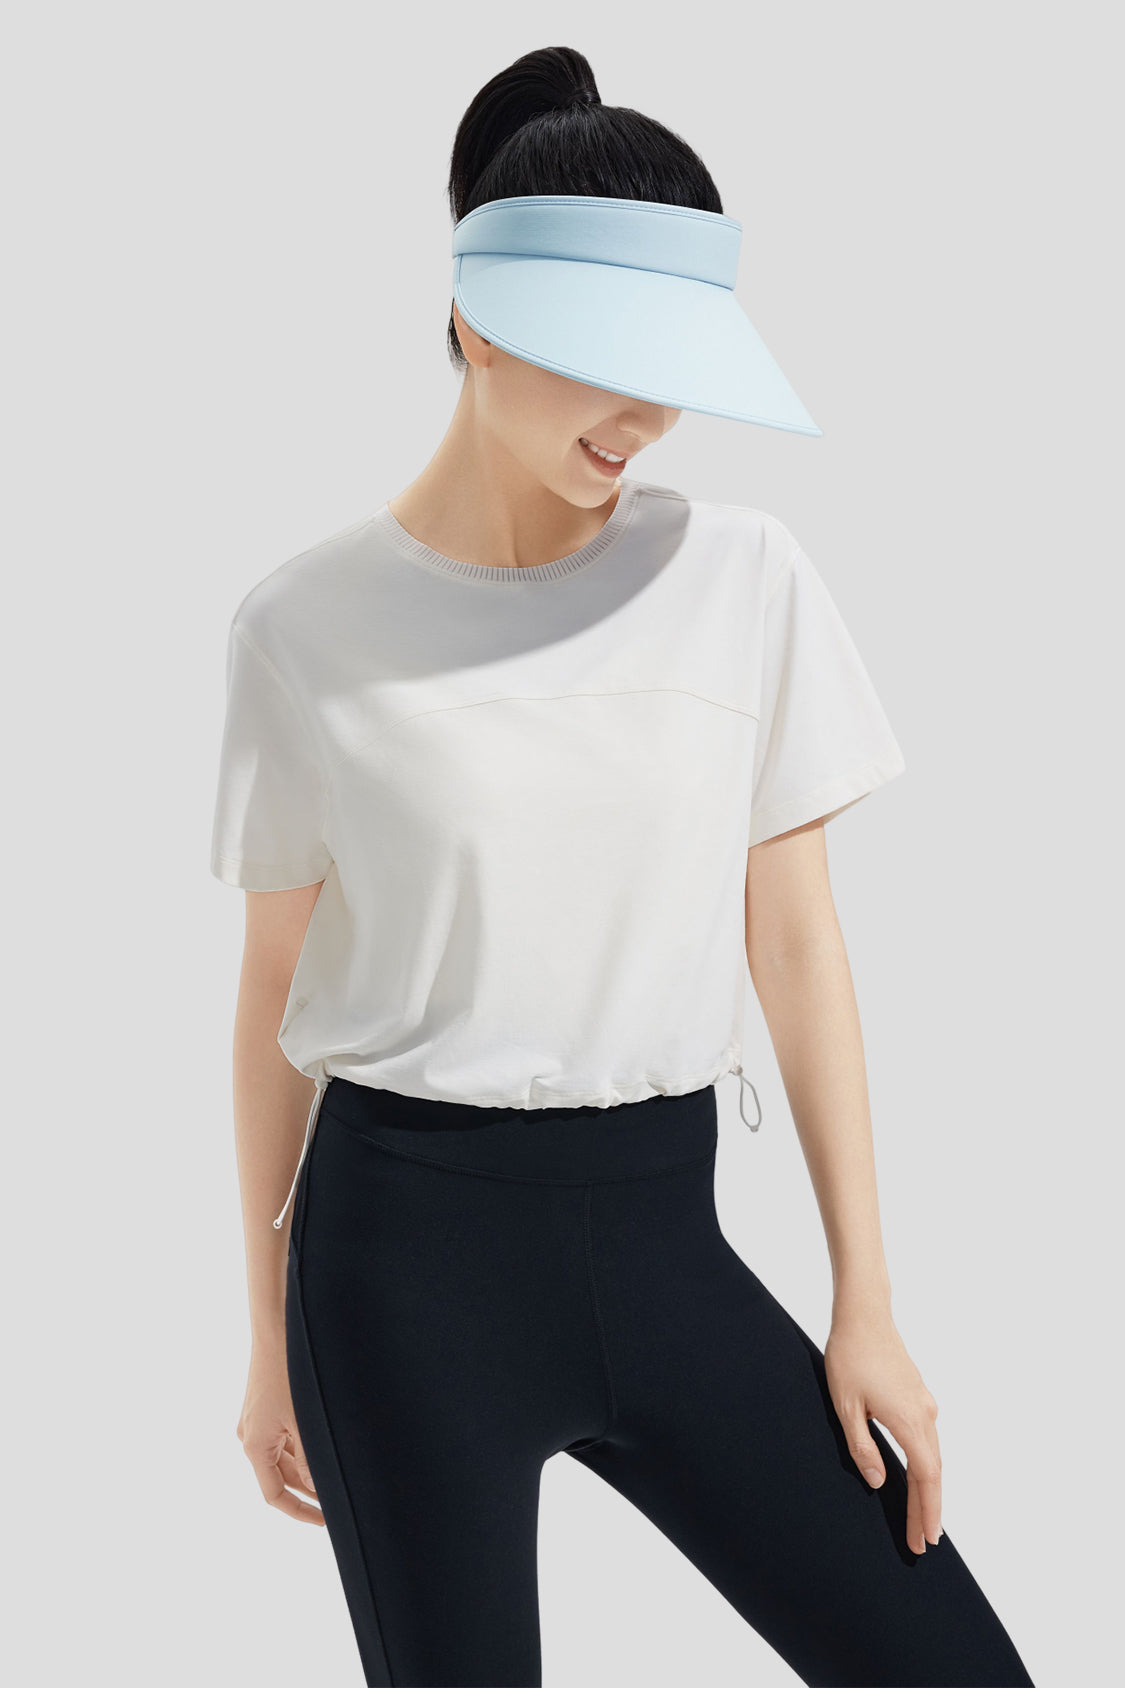 Guji Wide - Women's Sun Visor Hat UPF50+ One Size - Adjustable 55-58cm / White